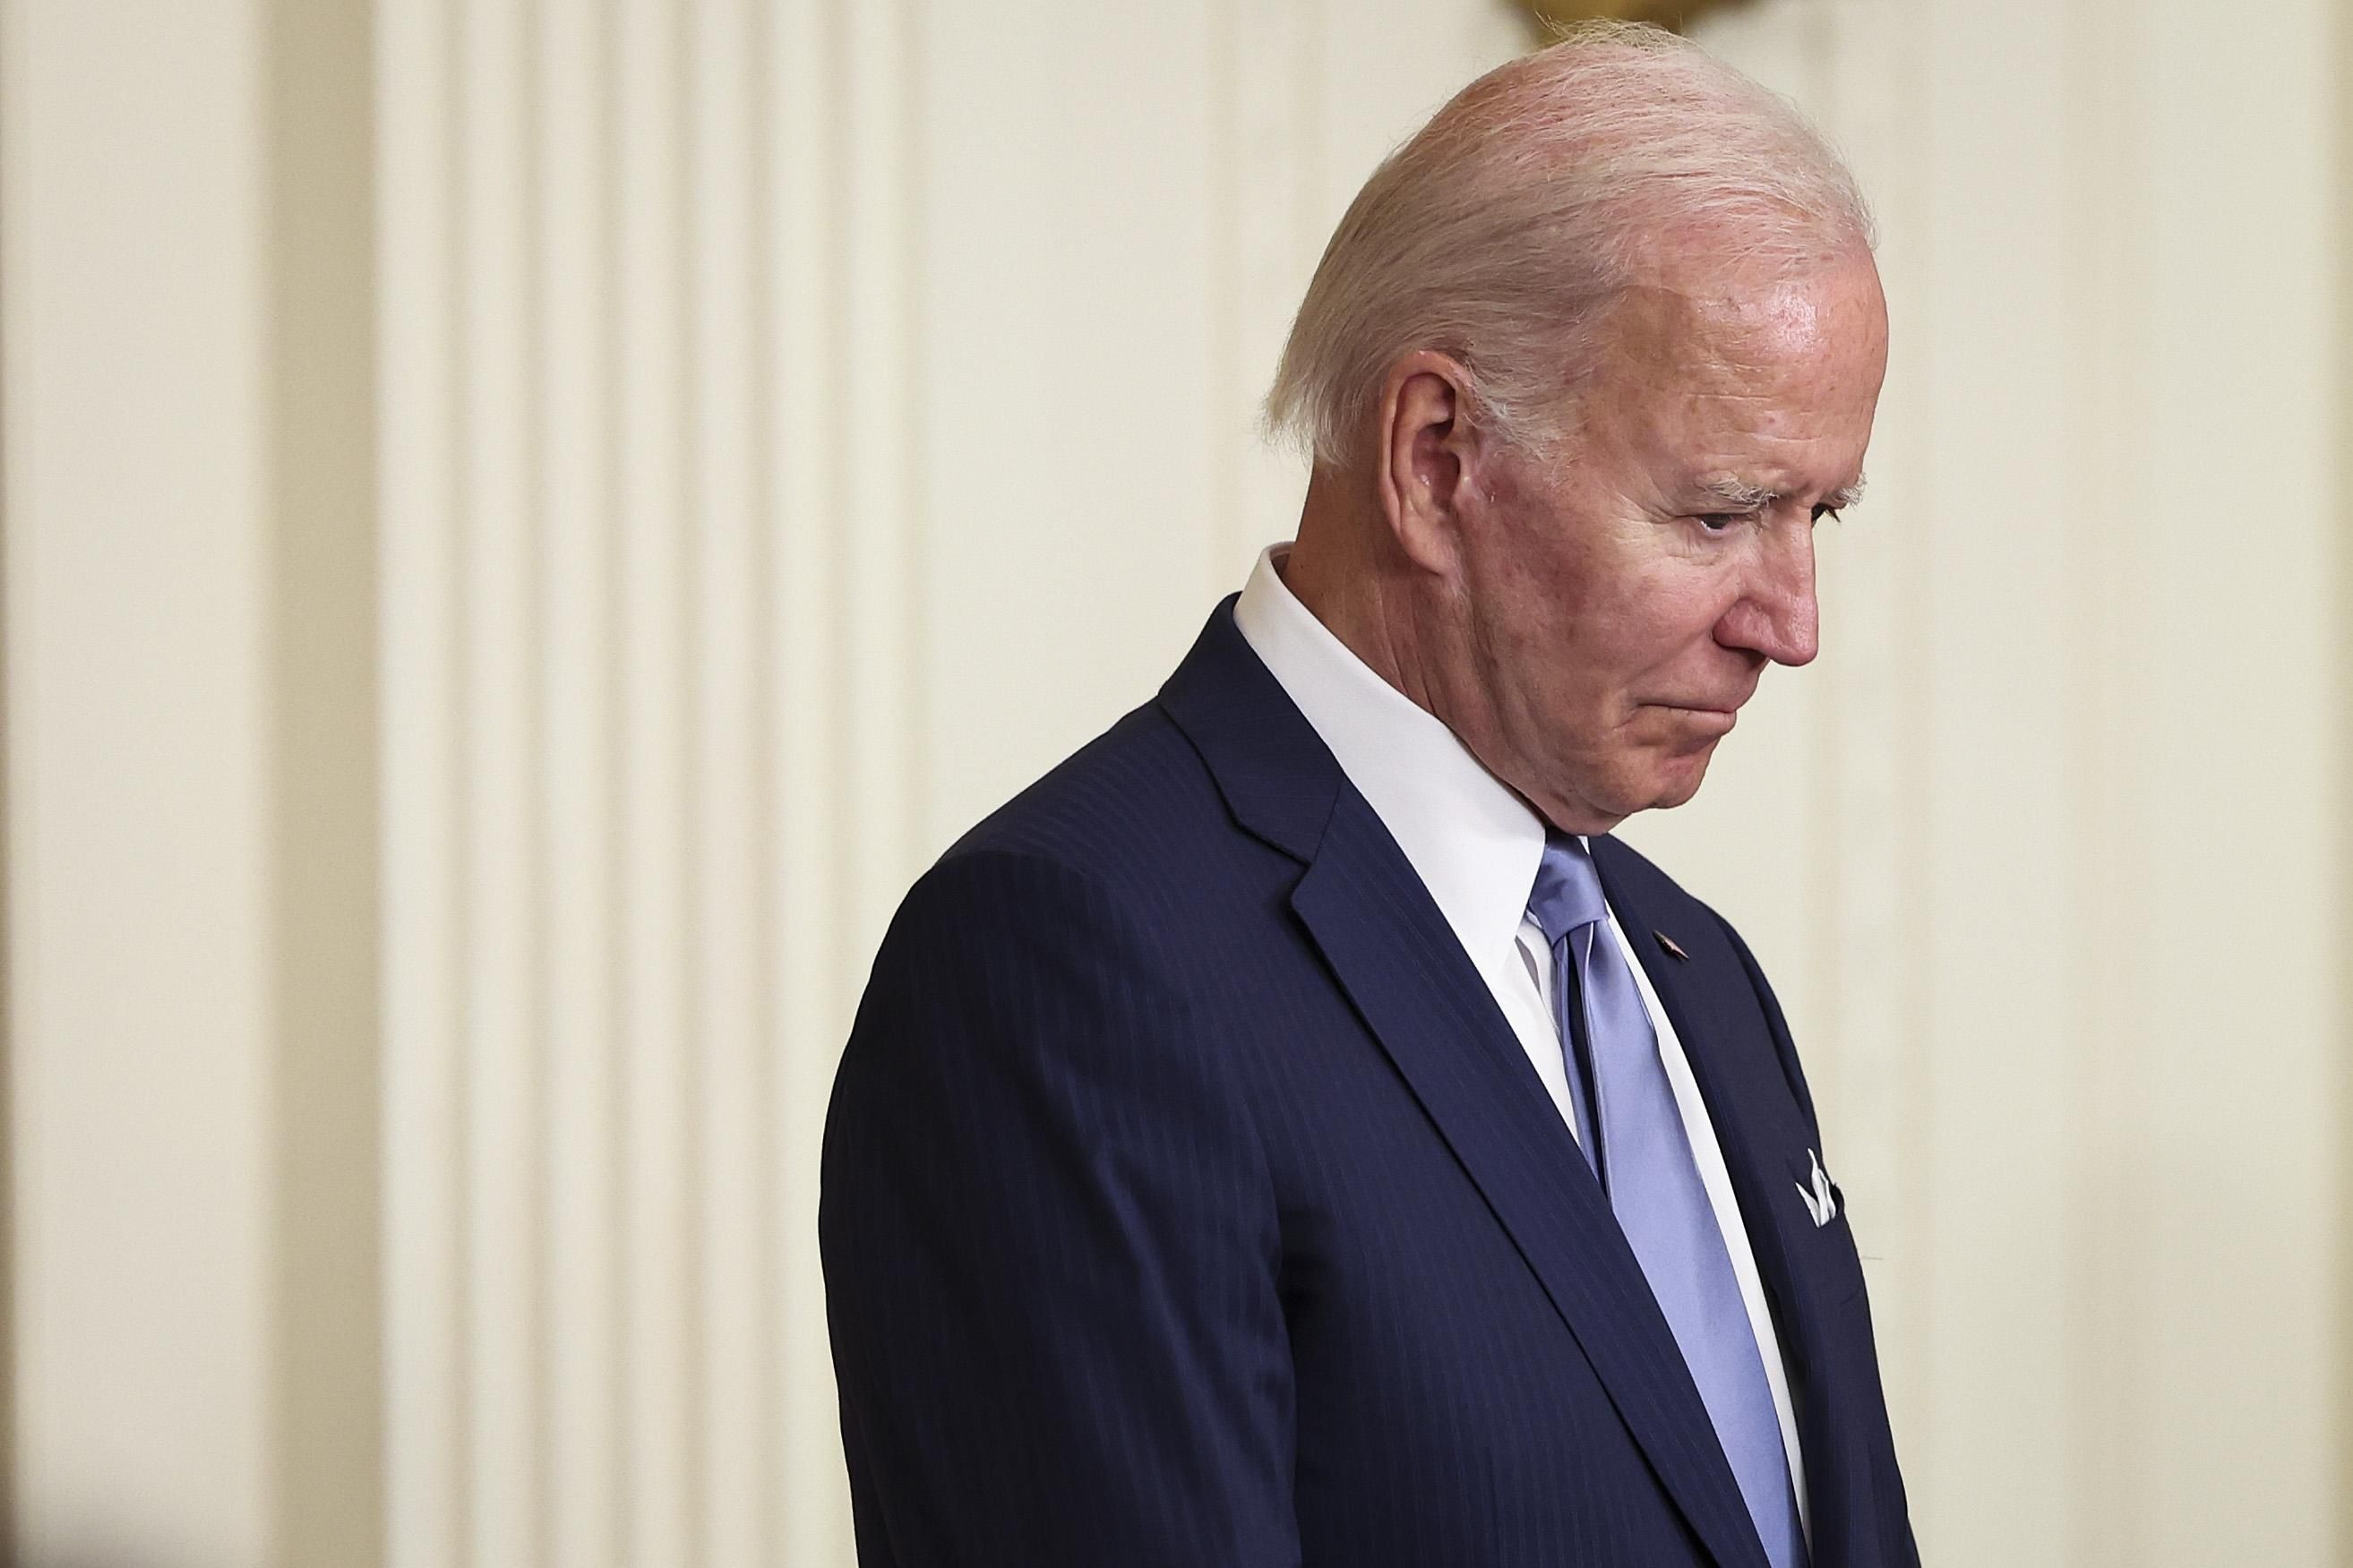 Joe Biden with his head bowed.